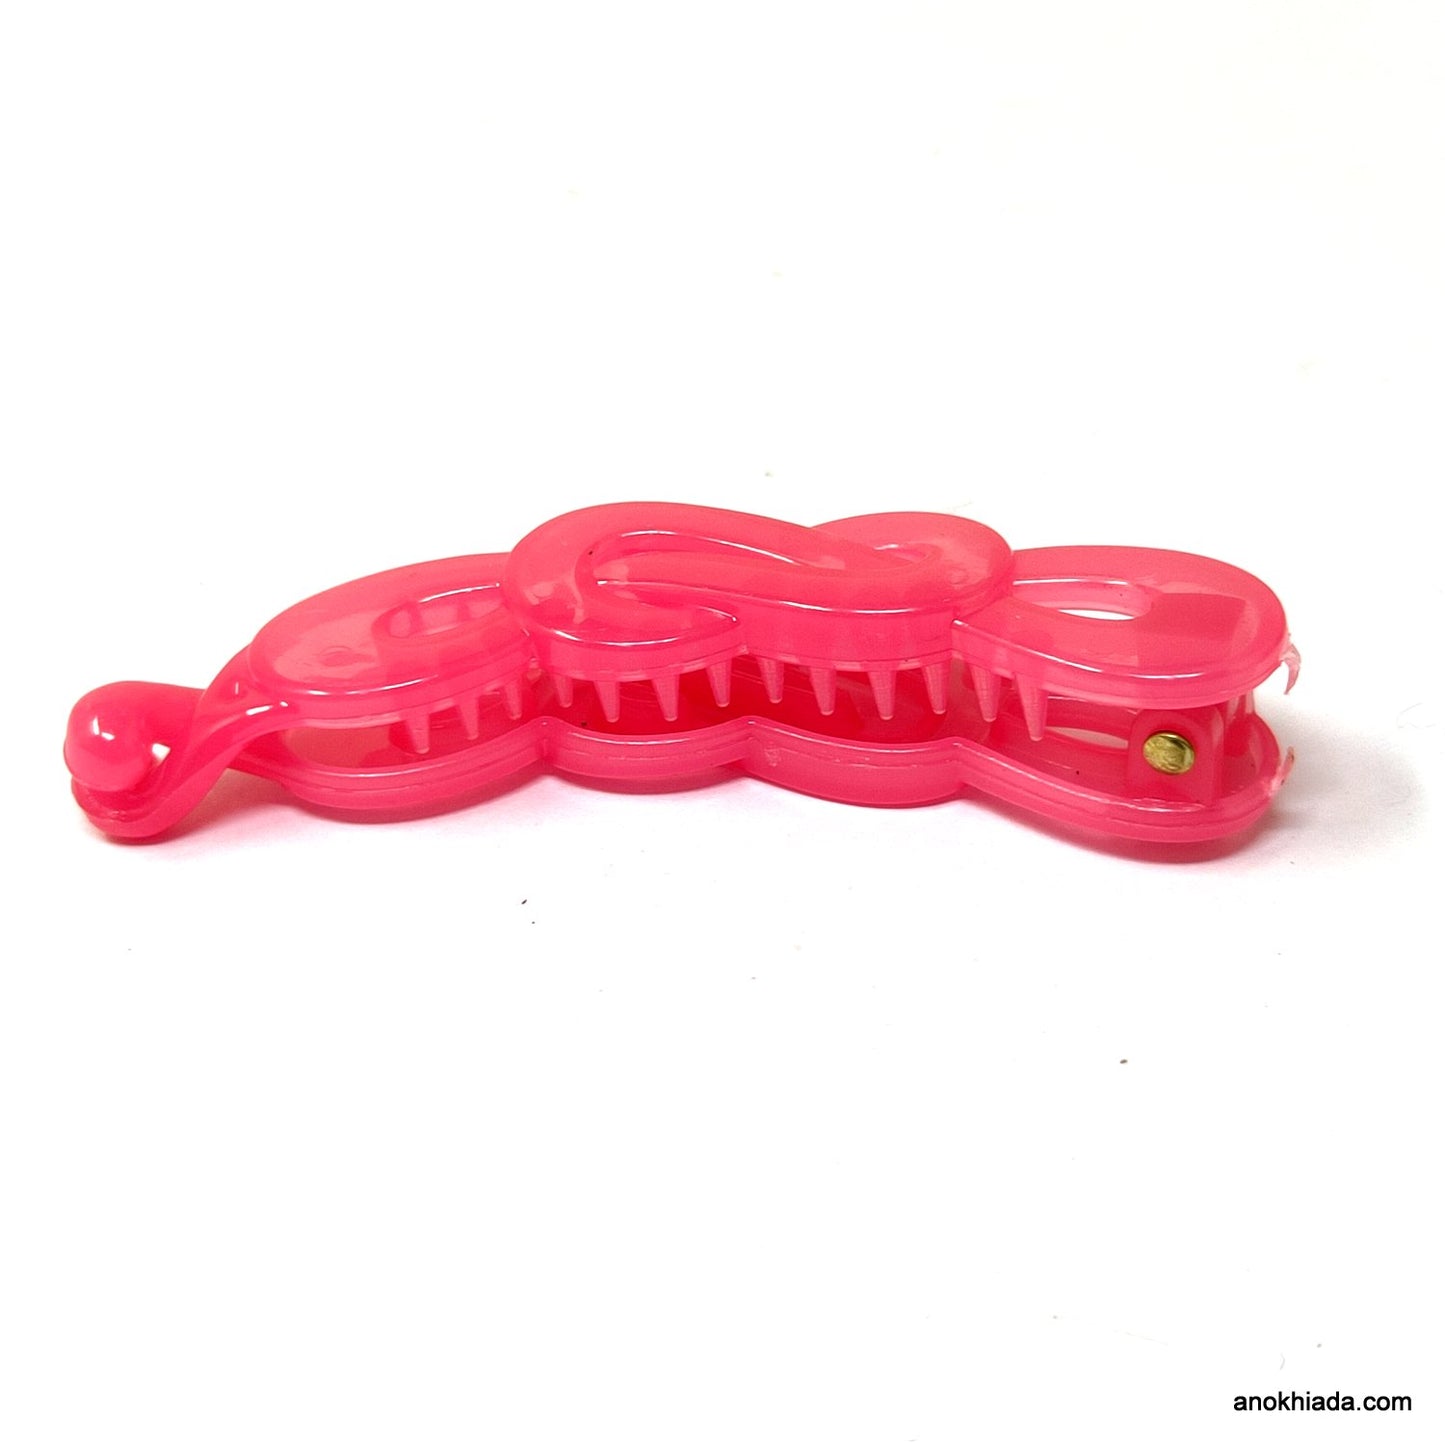 Translucent Infinity Design Small Light Pink Banana Hair Clip for Girls & Woman (98-14J Banana Hair Clips)